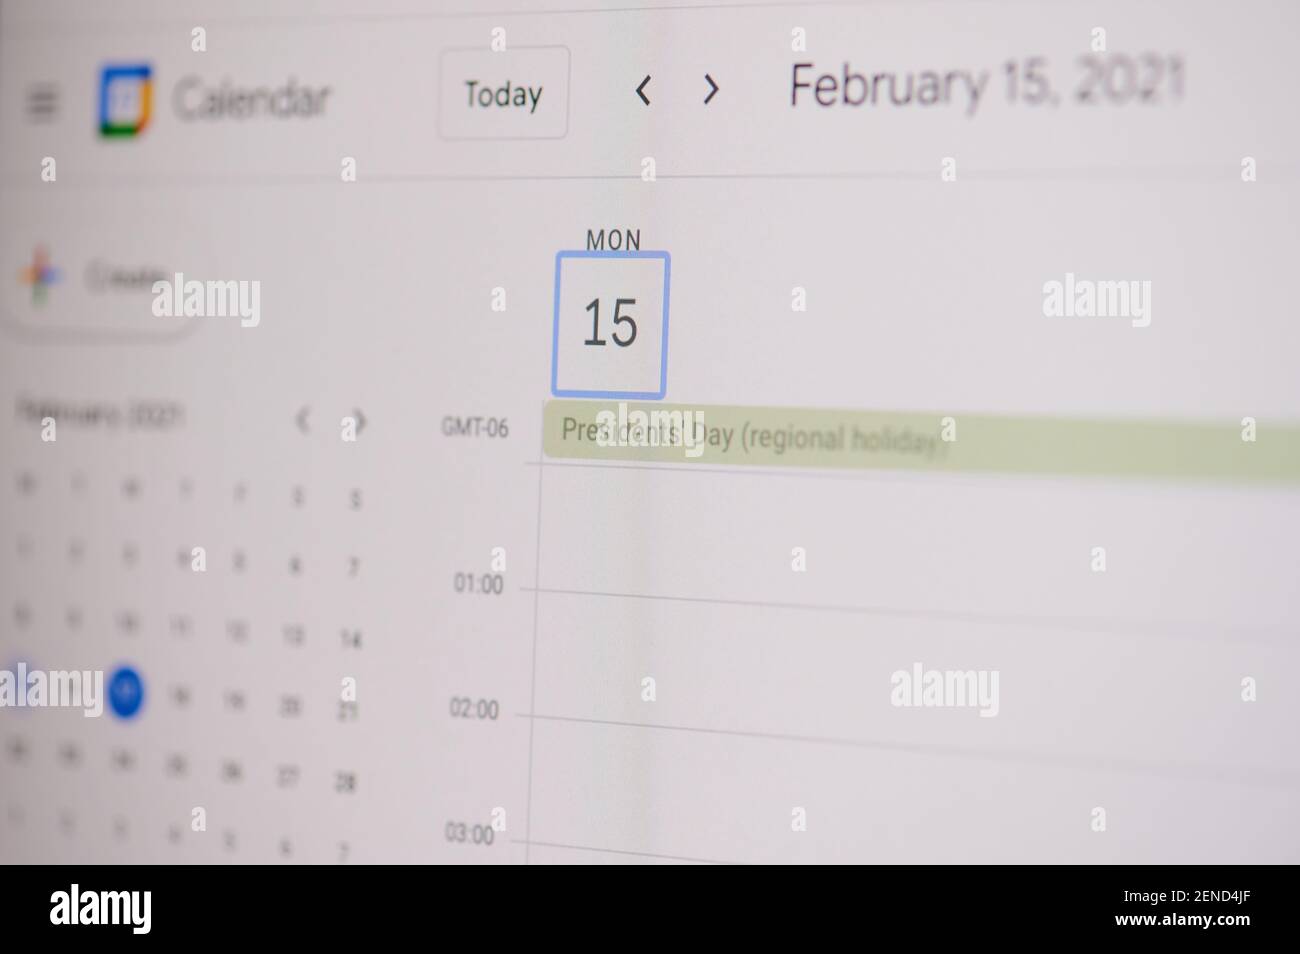 New york, USA - 17. Februar 2021: Präsident Tag 15 Februar auf google-Kalender auf Laptop-Bildschirm Nahaufnahme. Stockfoto